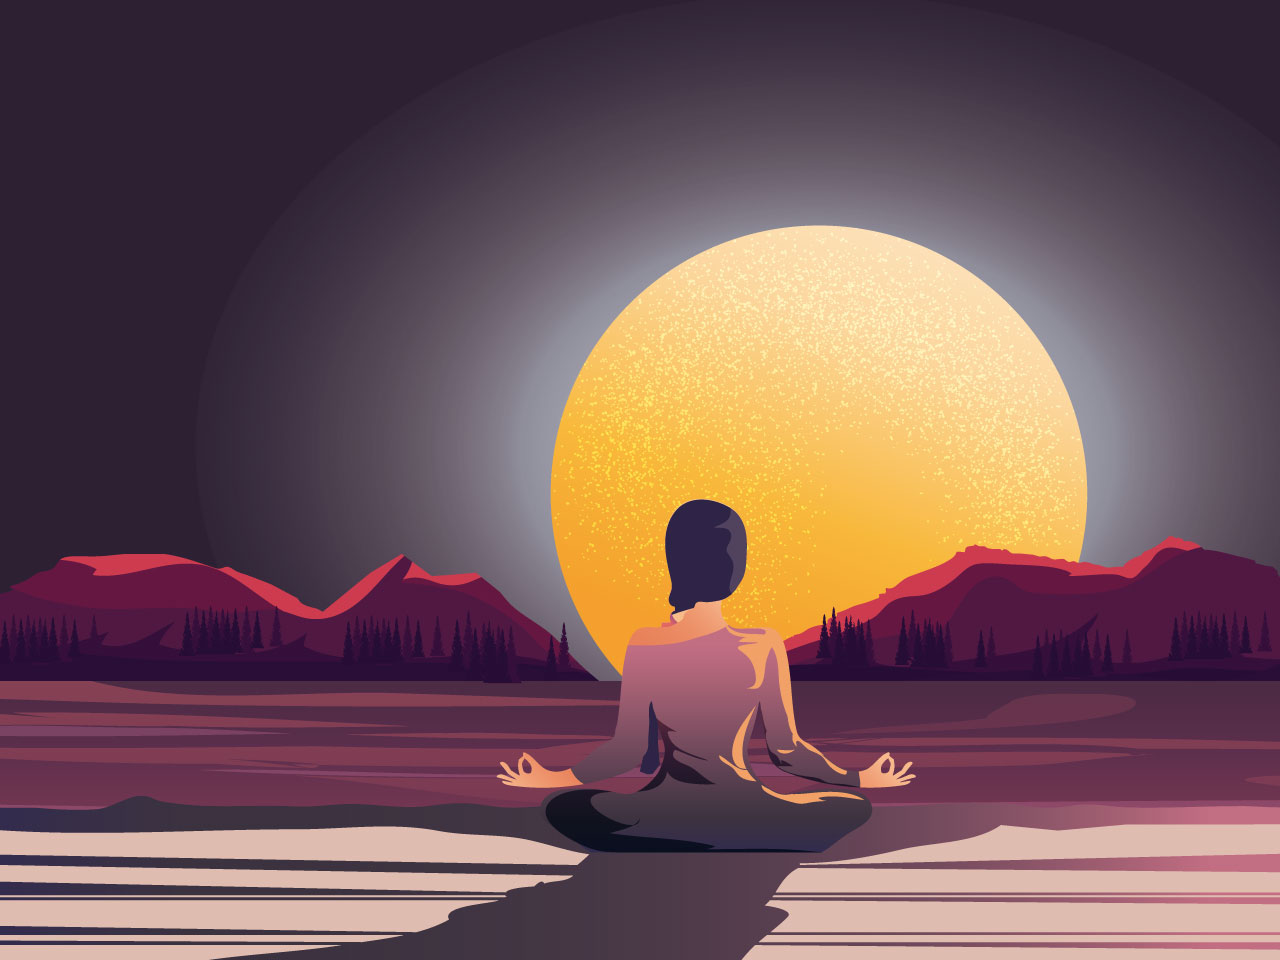 Indian women night time meditation by nature cartoon illustration image